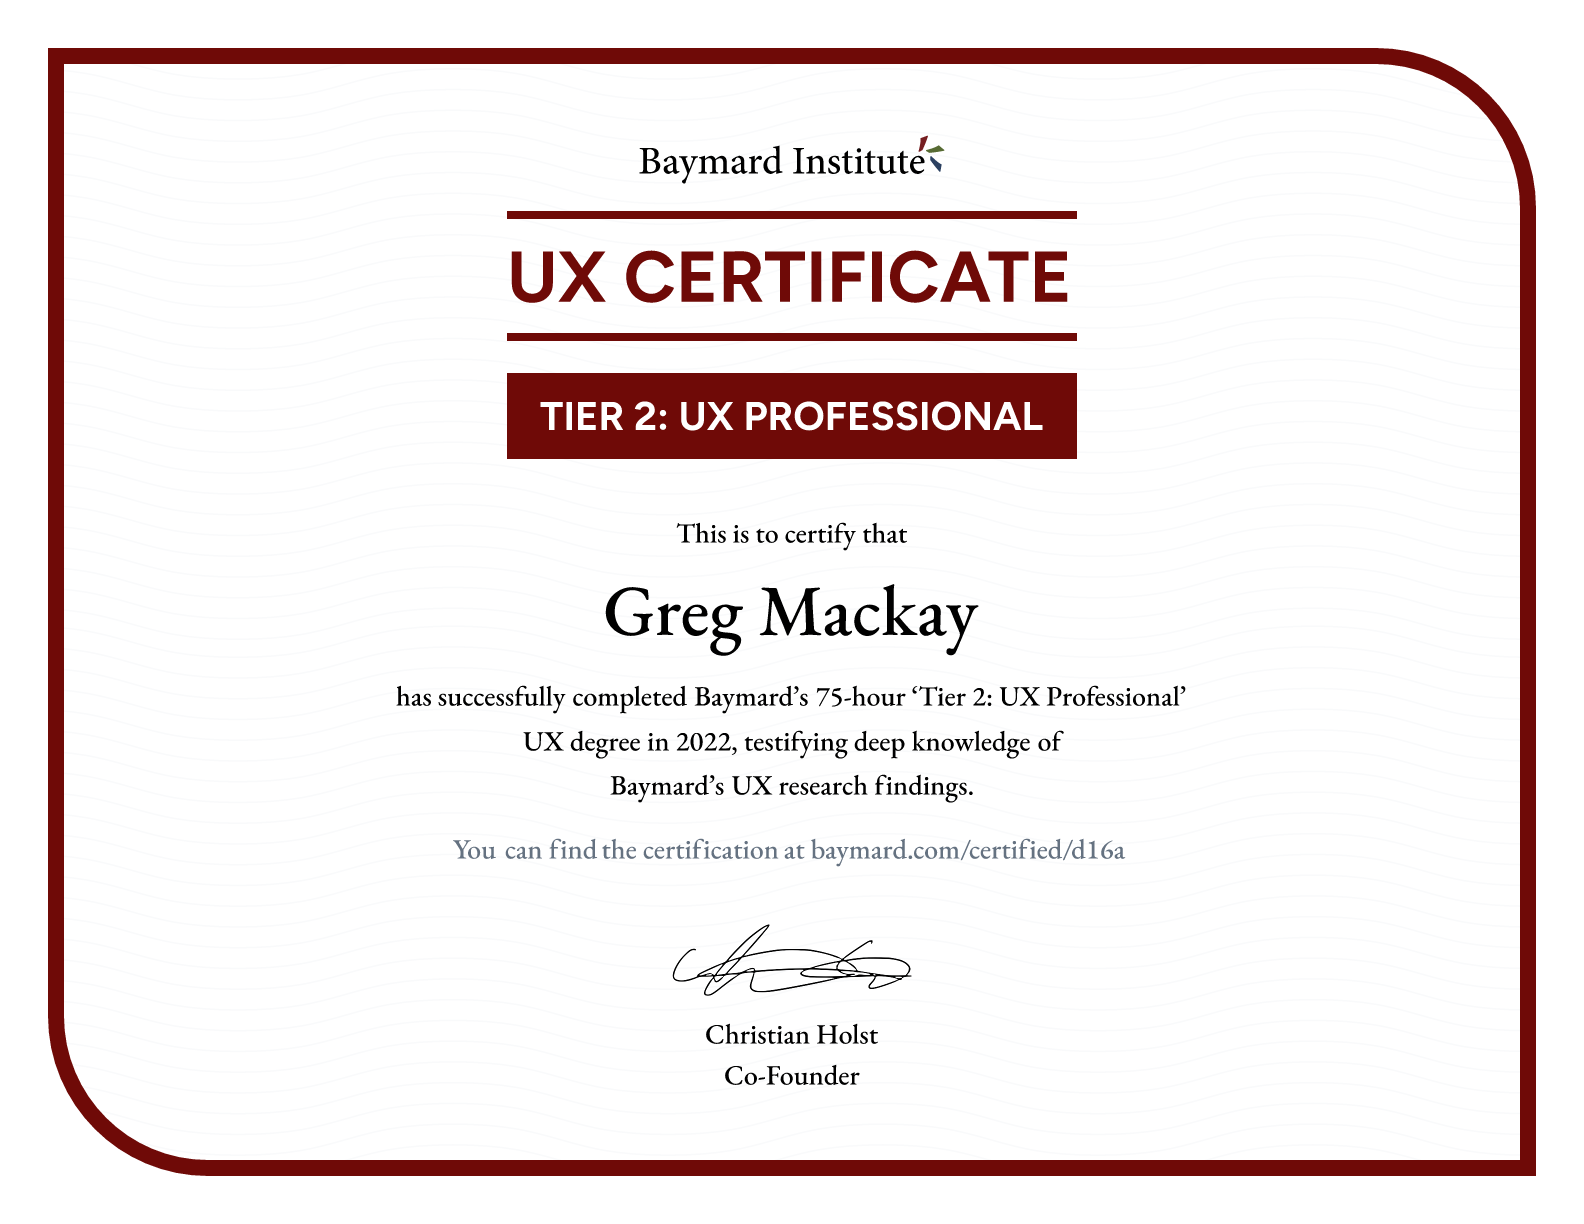 Greg Mackay’s certificate